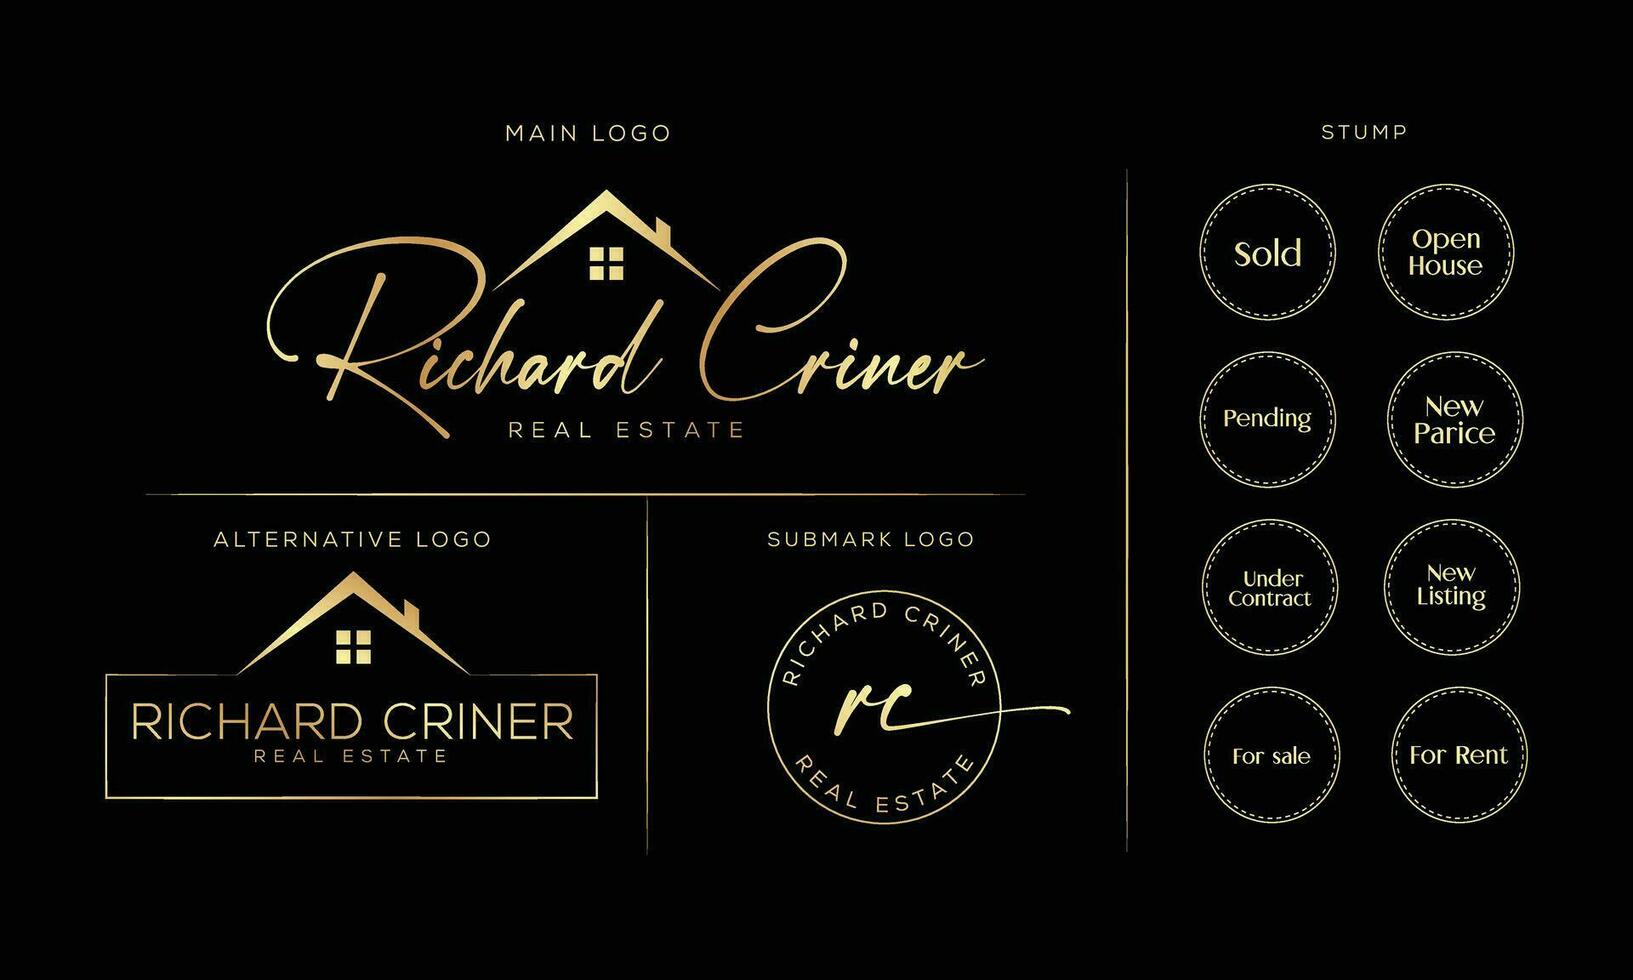 Real estate logo Realtor logo property logo design vector template with full branding